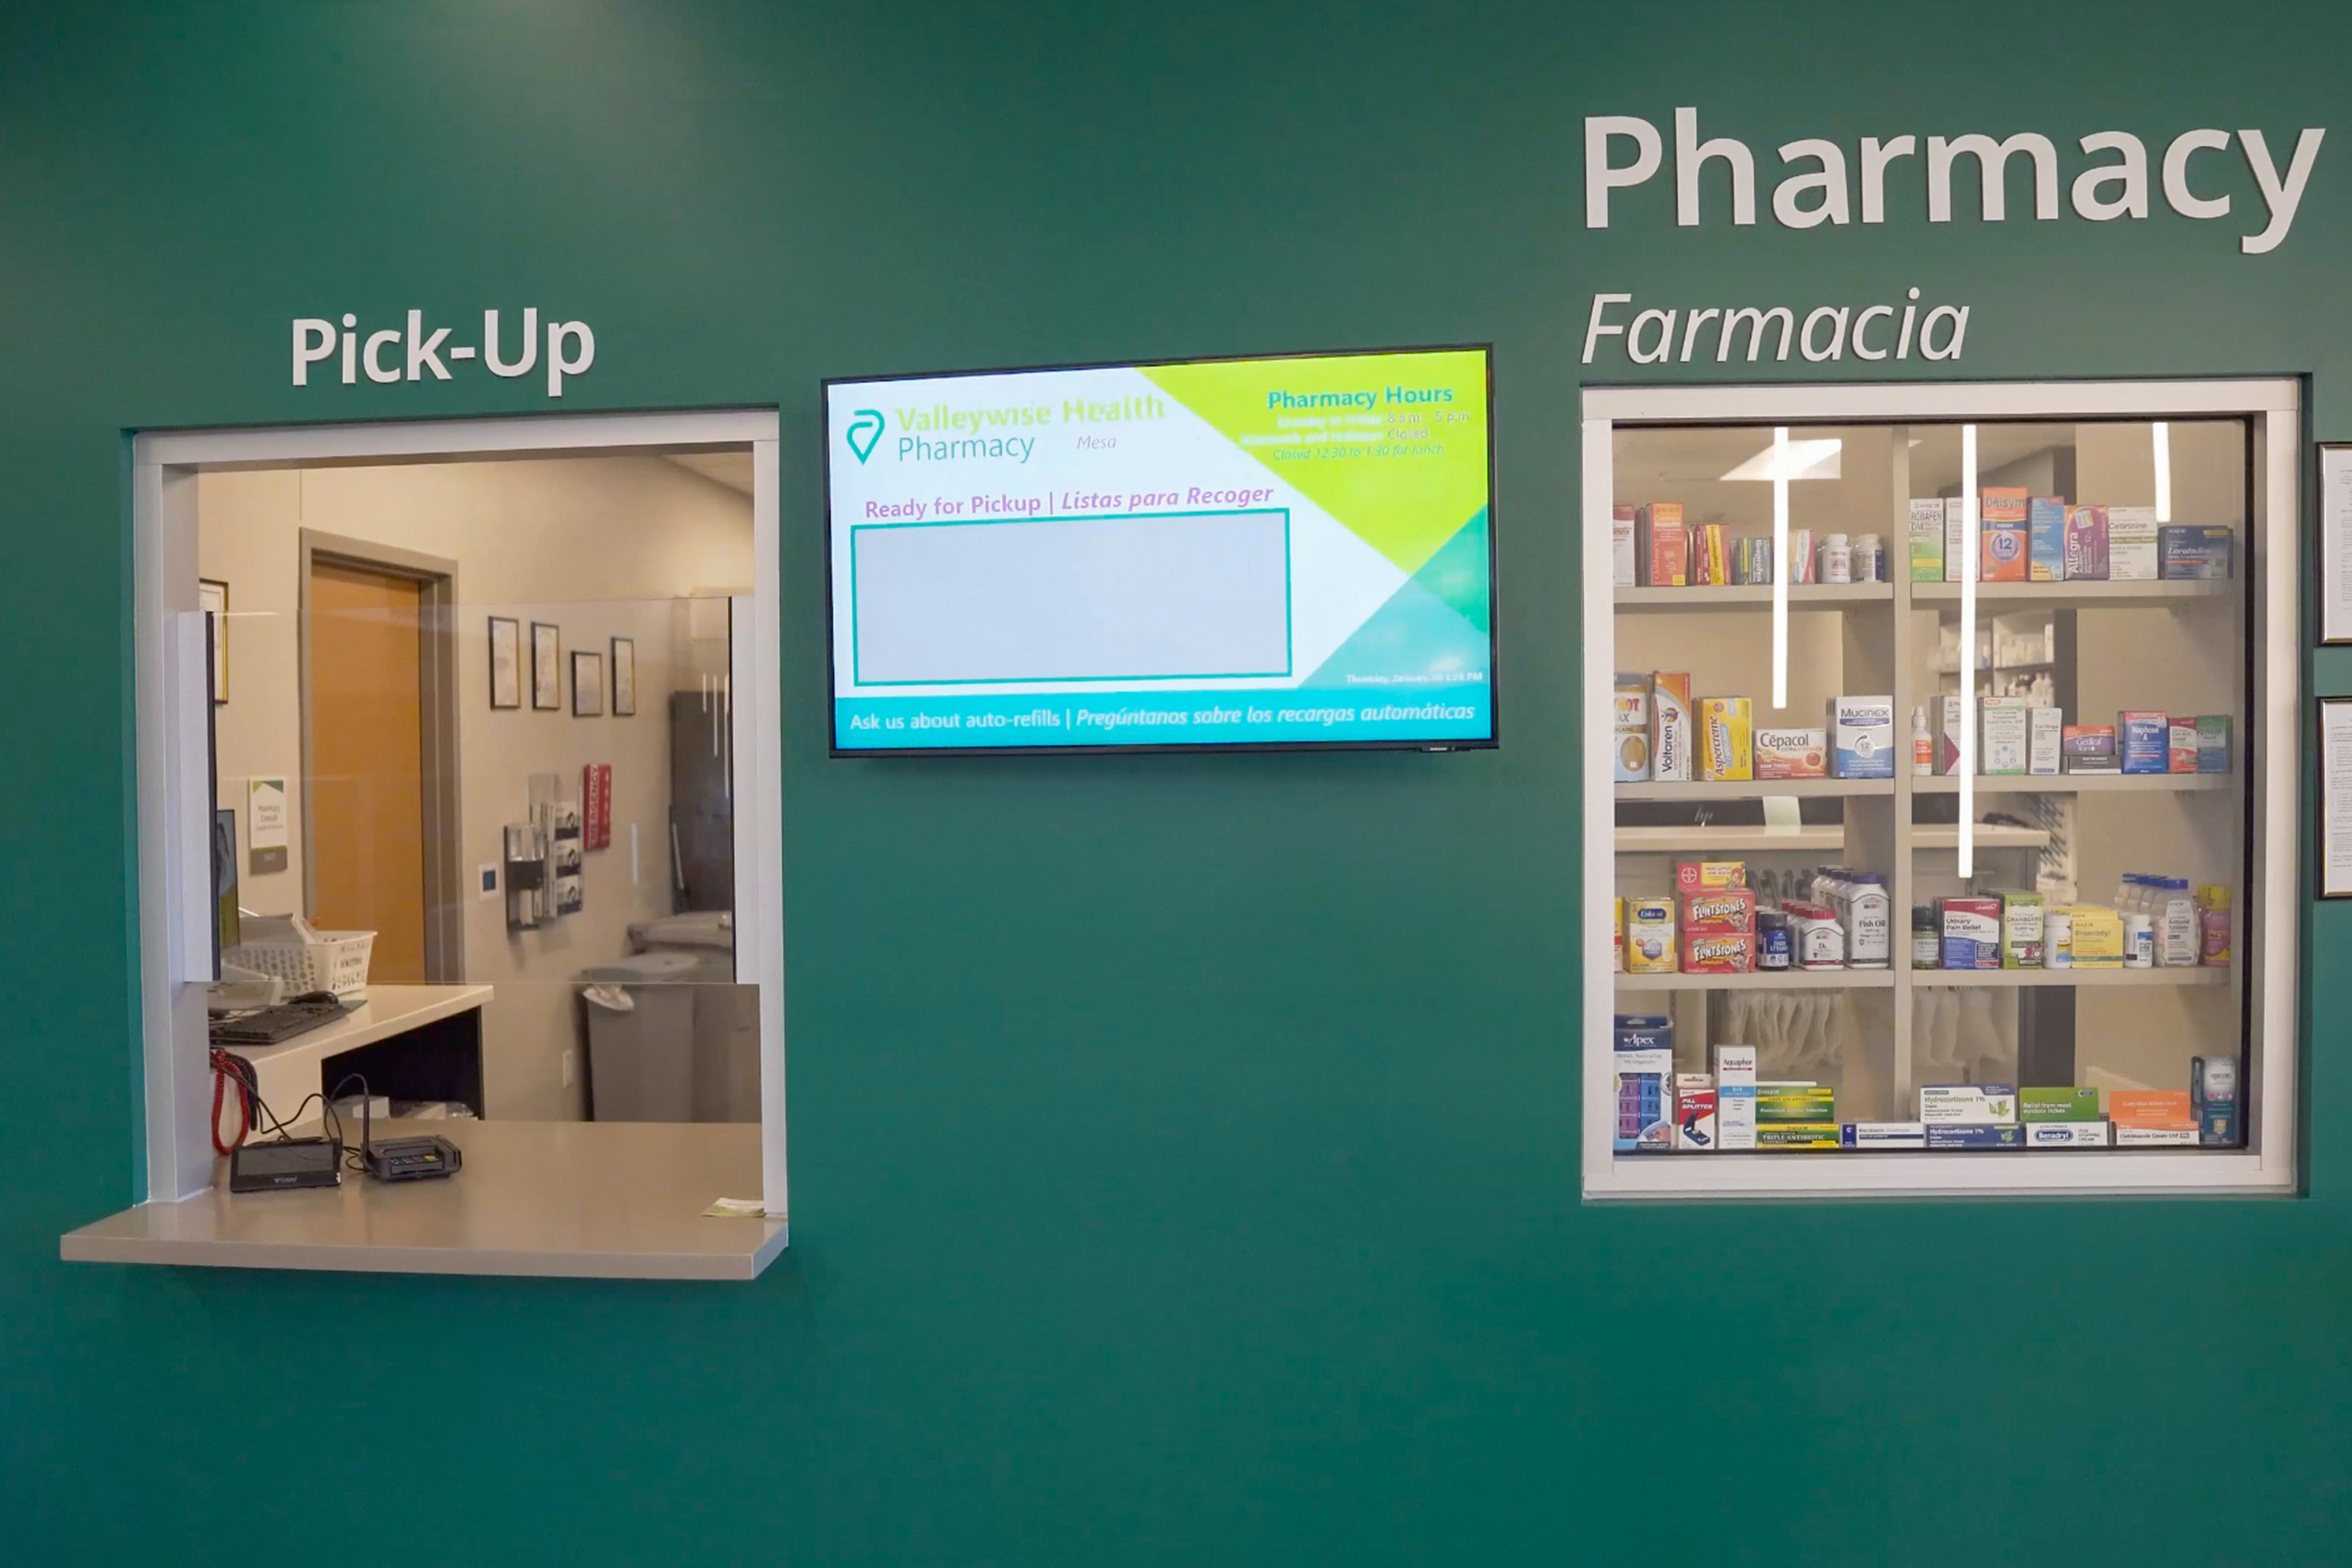 Mesa Pharmacy